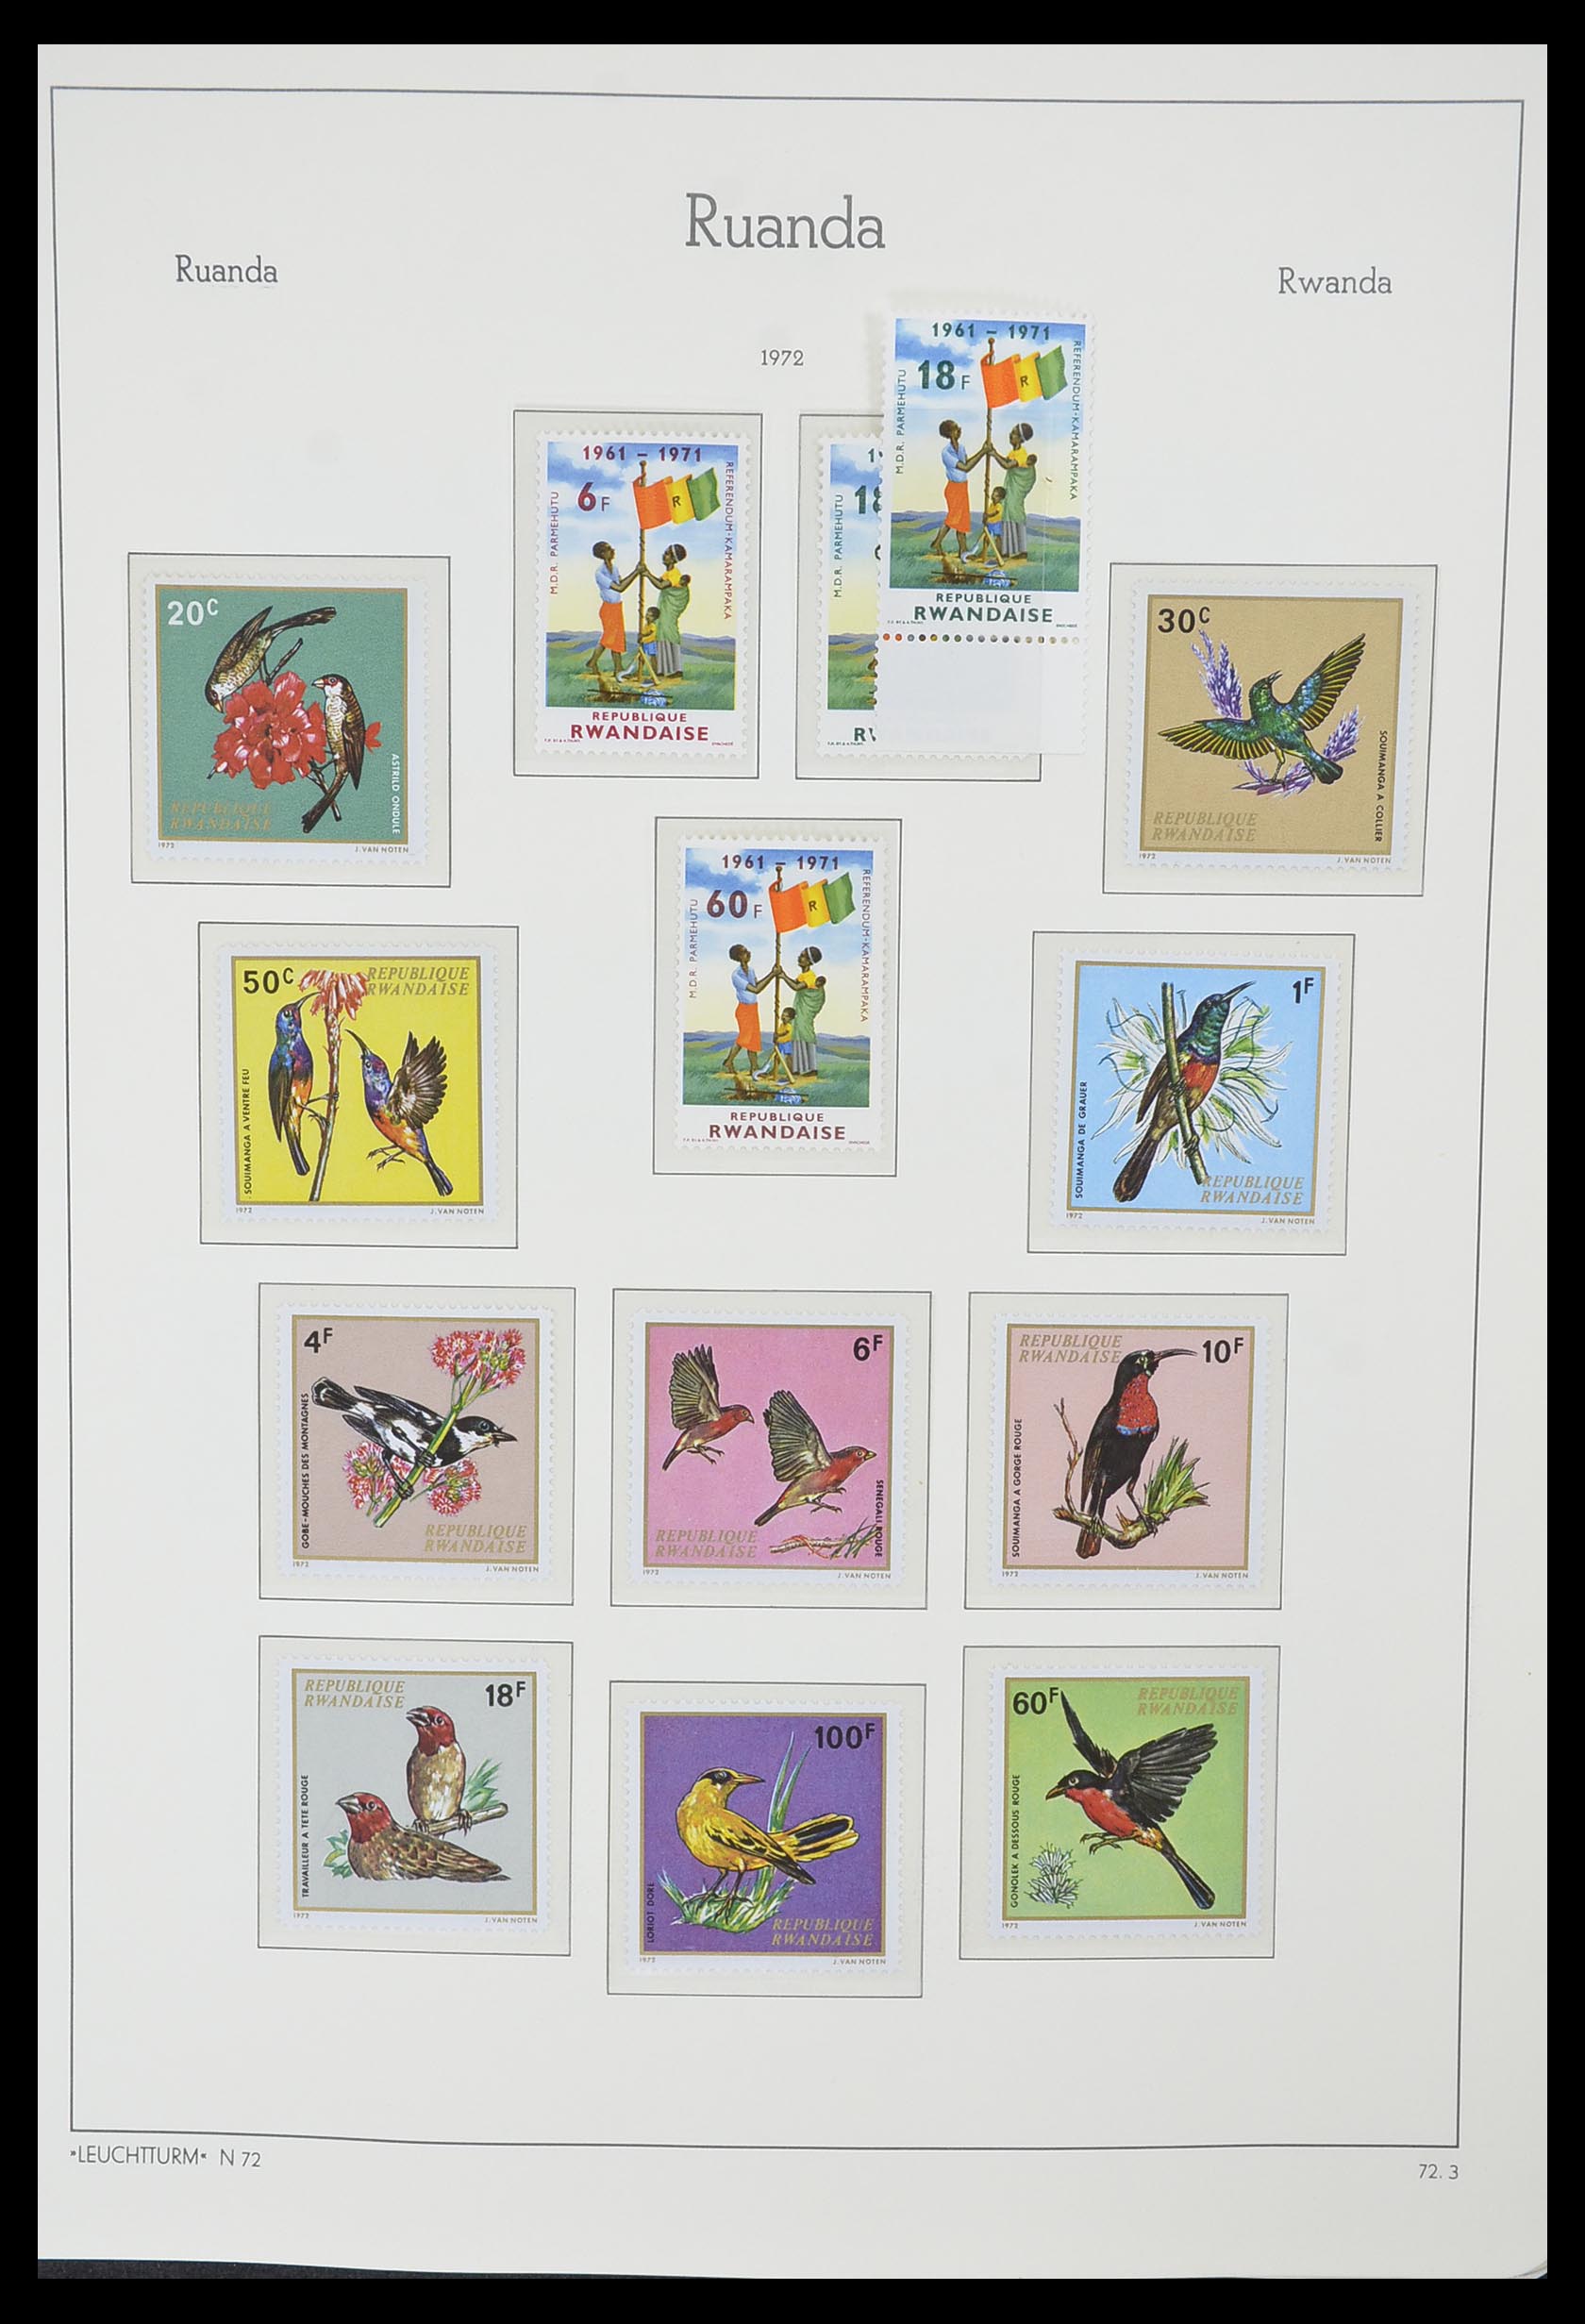 33767 070 - Stamp collection 33767 Rwanda 1962-1988.